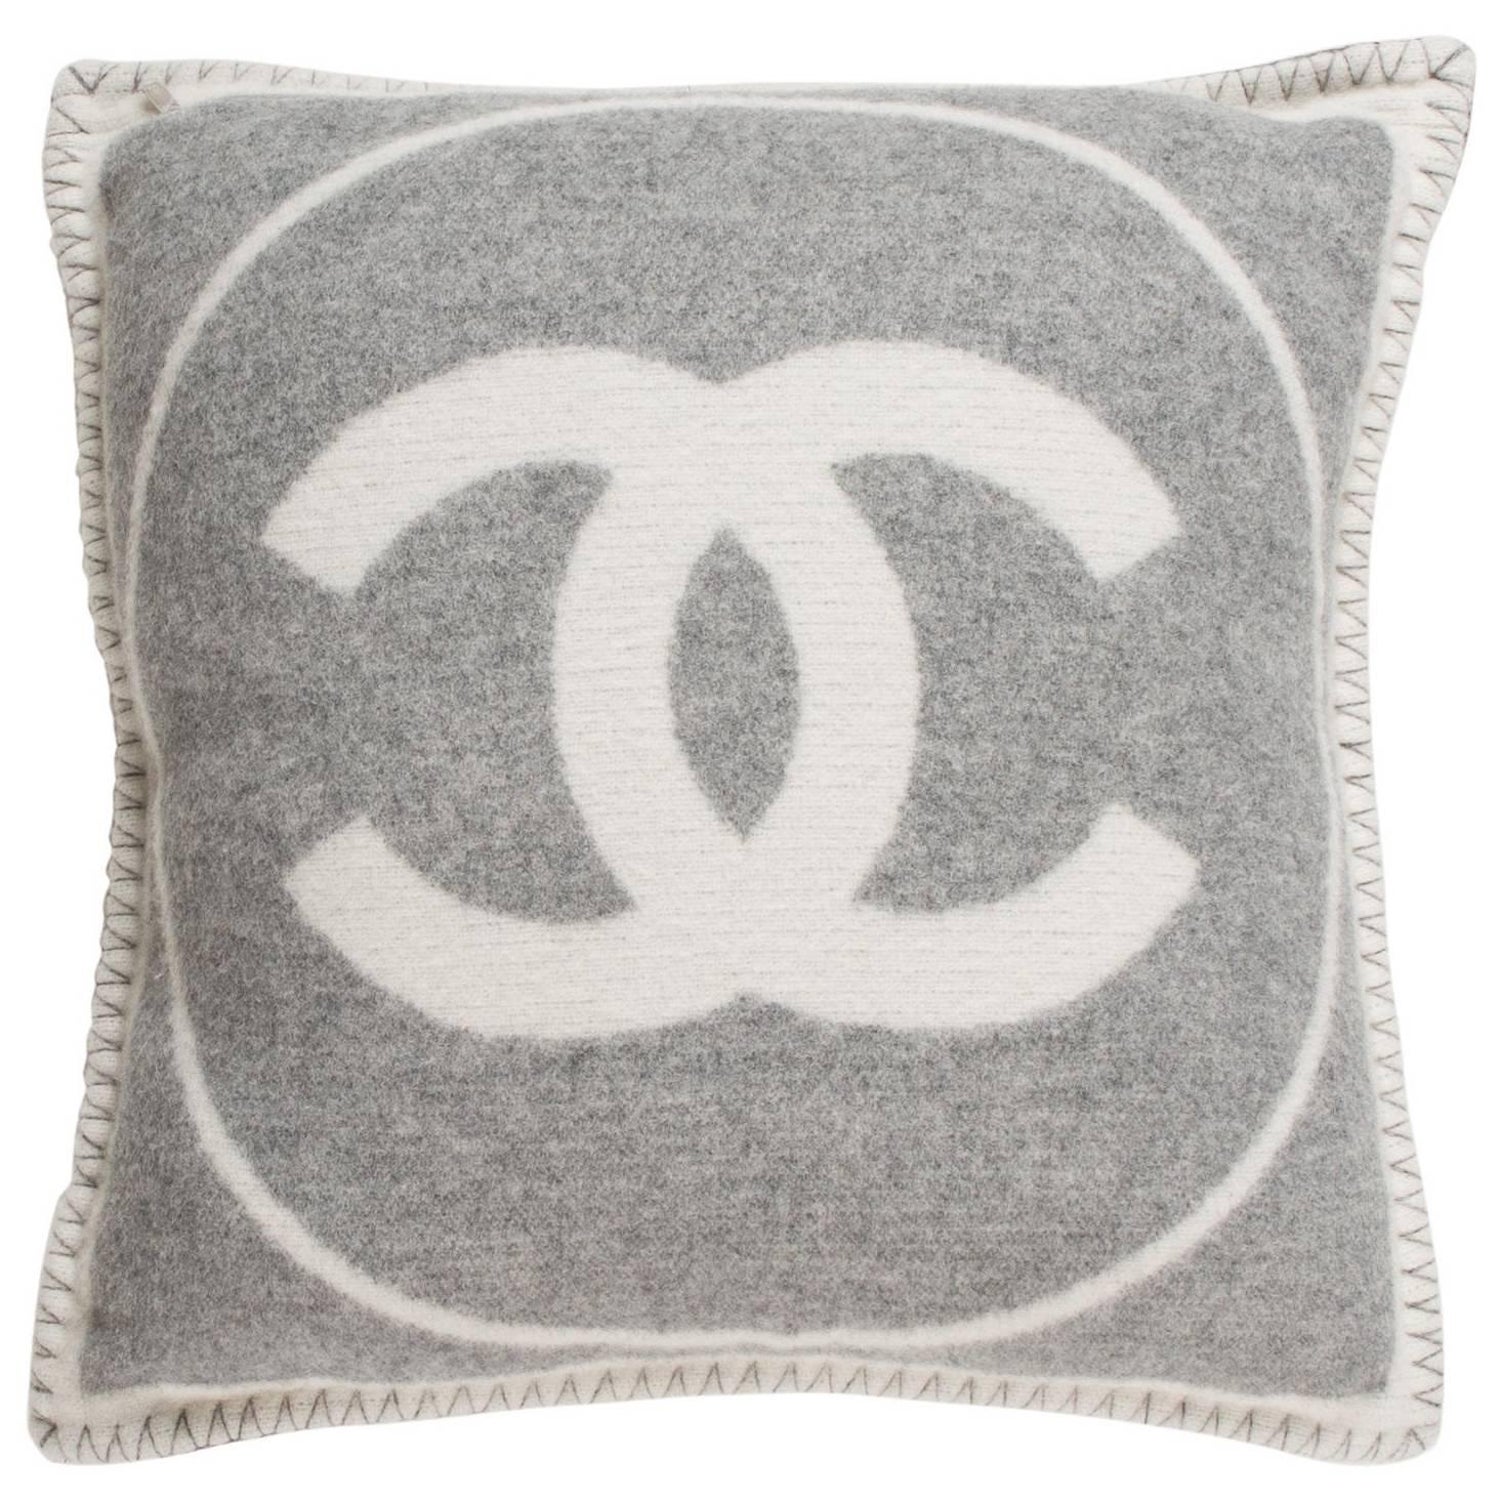 Chanel CC Throw Pillow - Black Pillows, Pillows & Throws - CHA840193